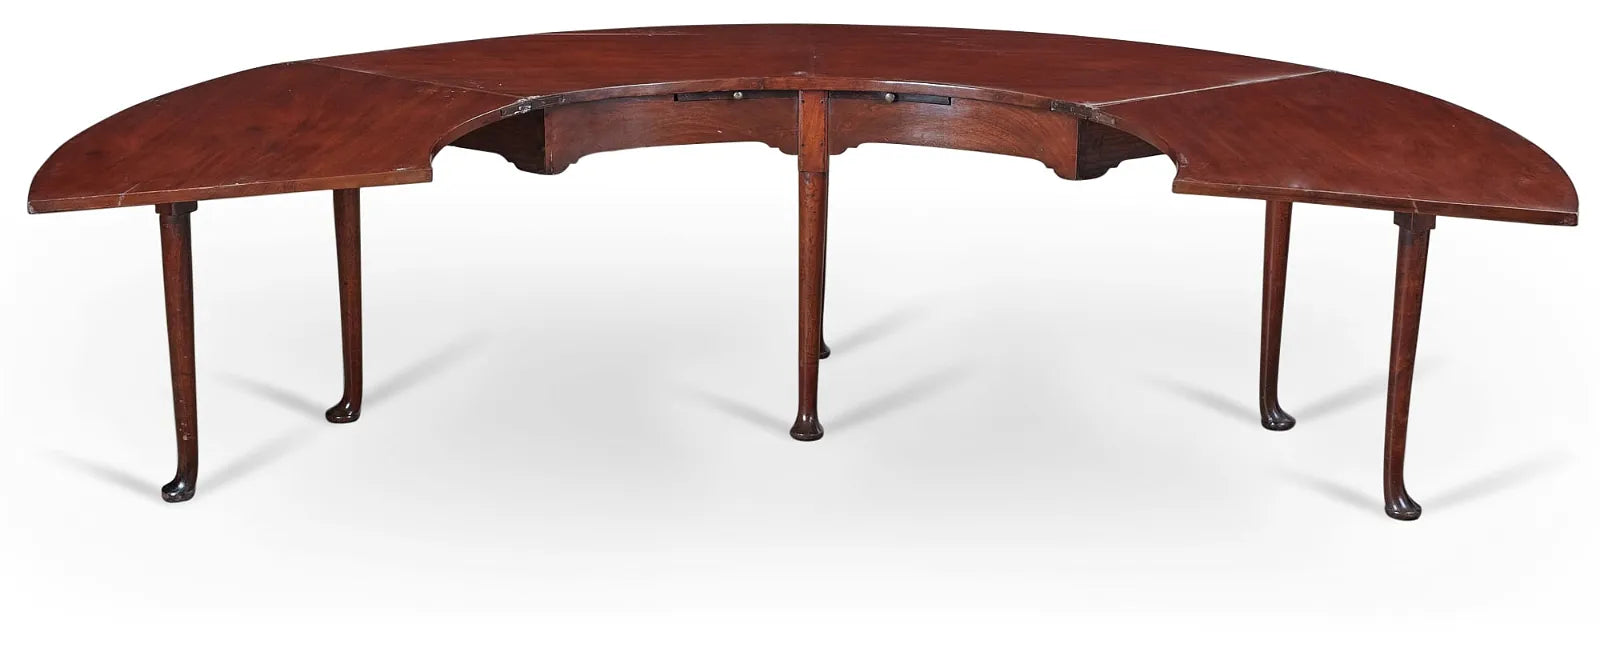 AF1-001: Early 19th Century Georgian Mahogany Horseshoe Semi-Circular "Hunt" Table